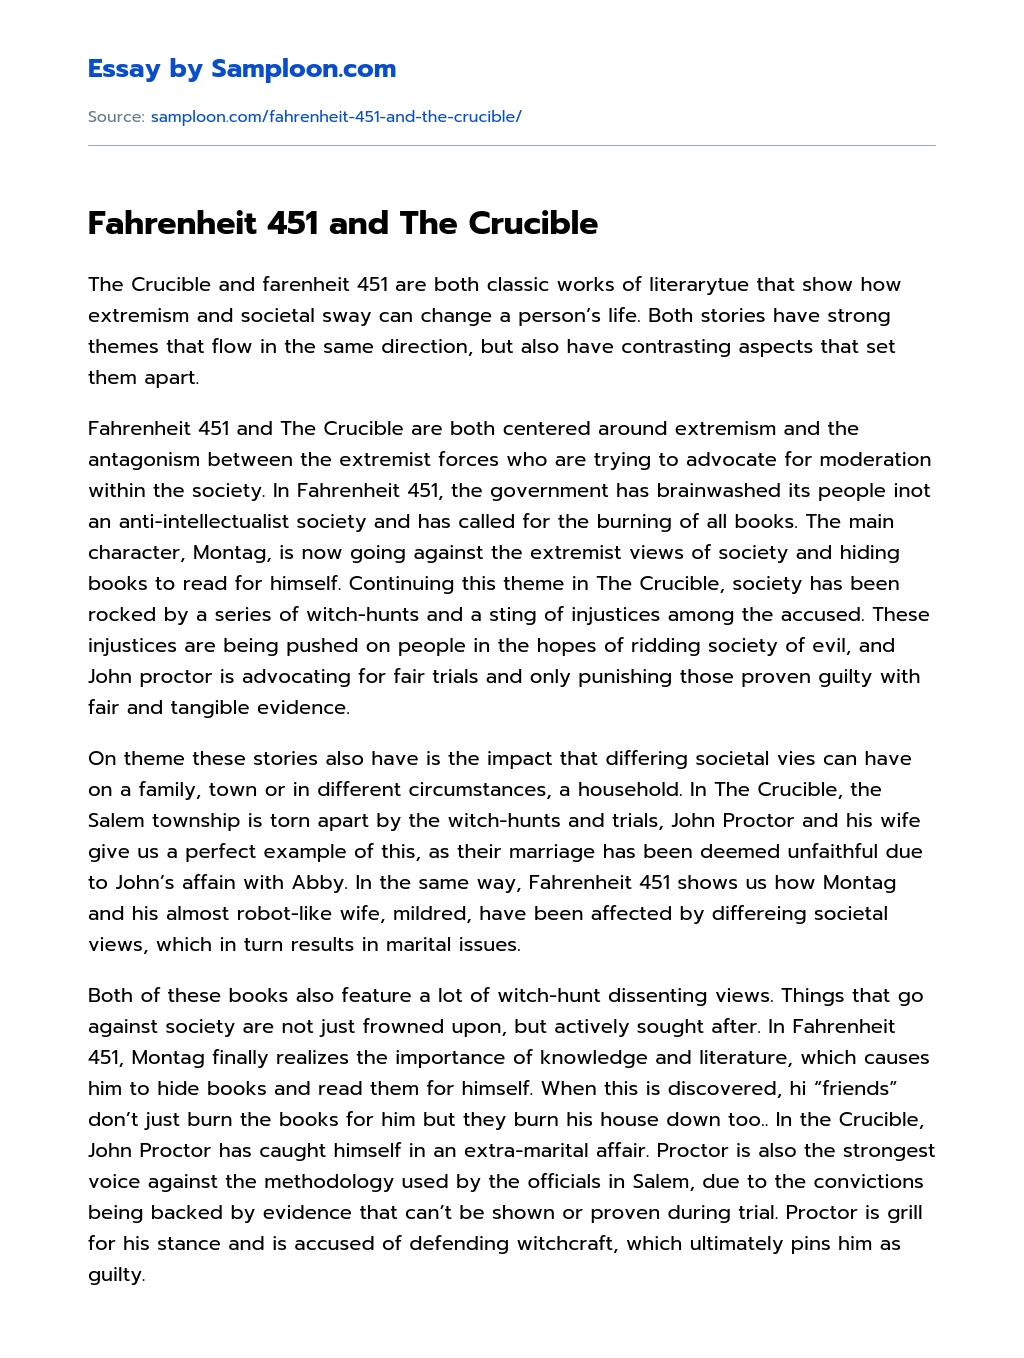 Fahrenheit 451 and The Crucible Summary essay